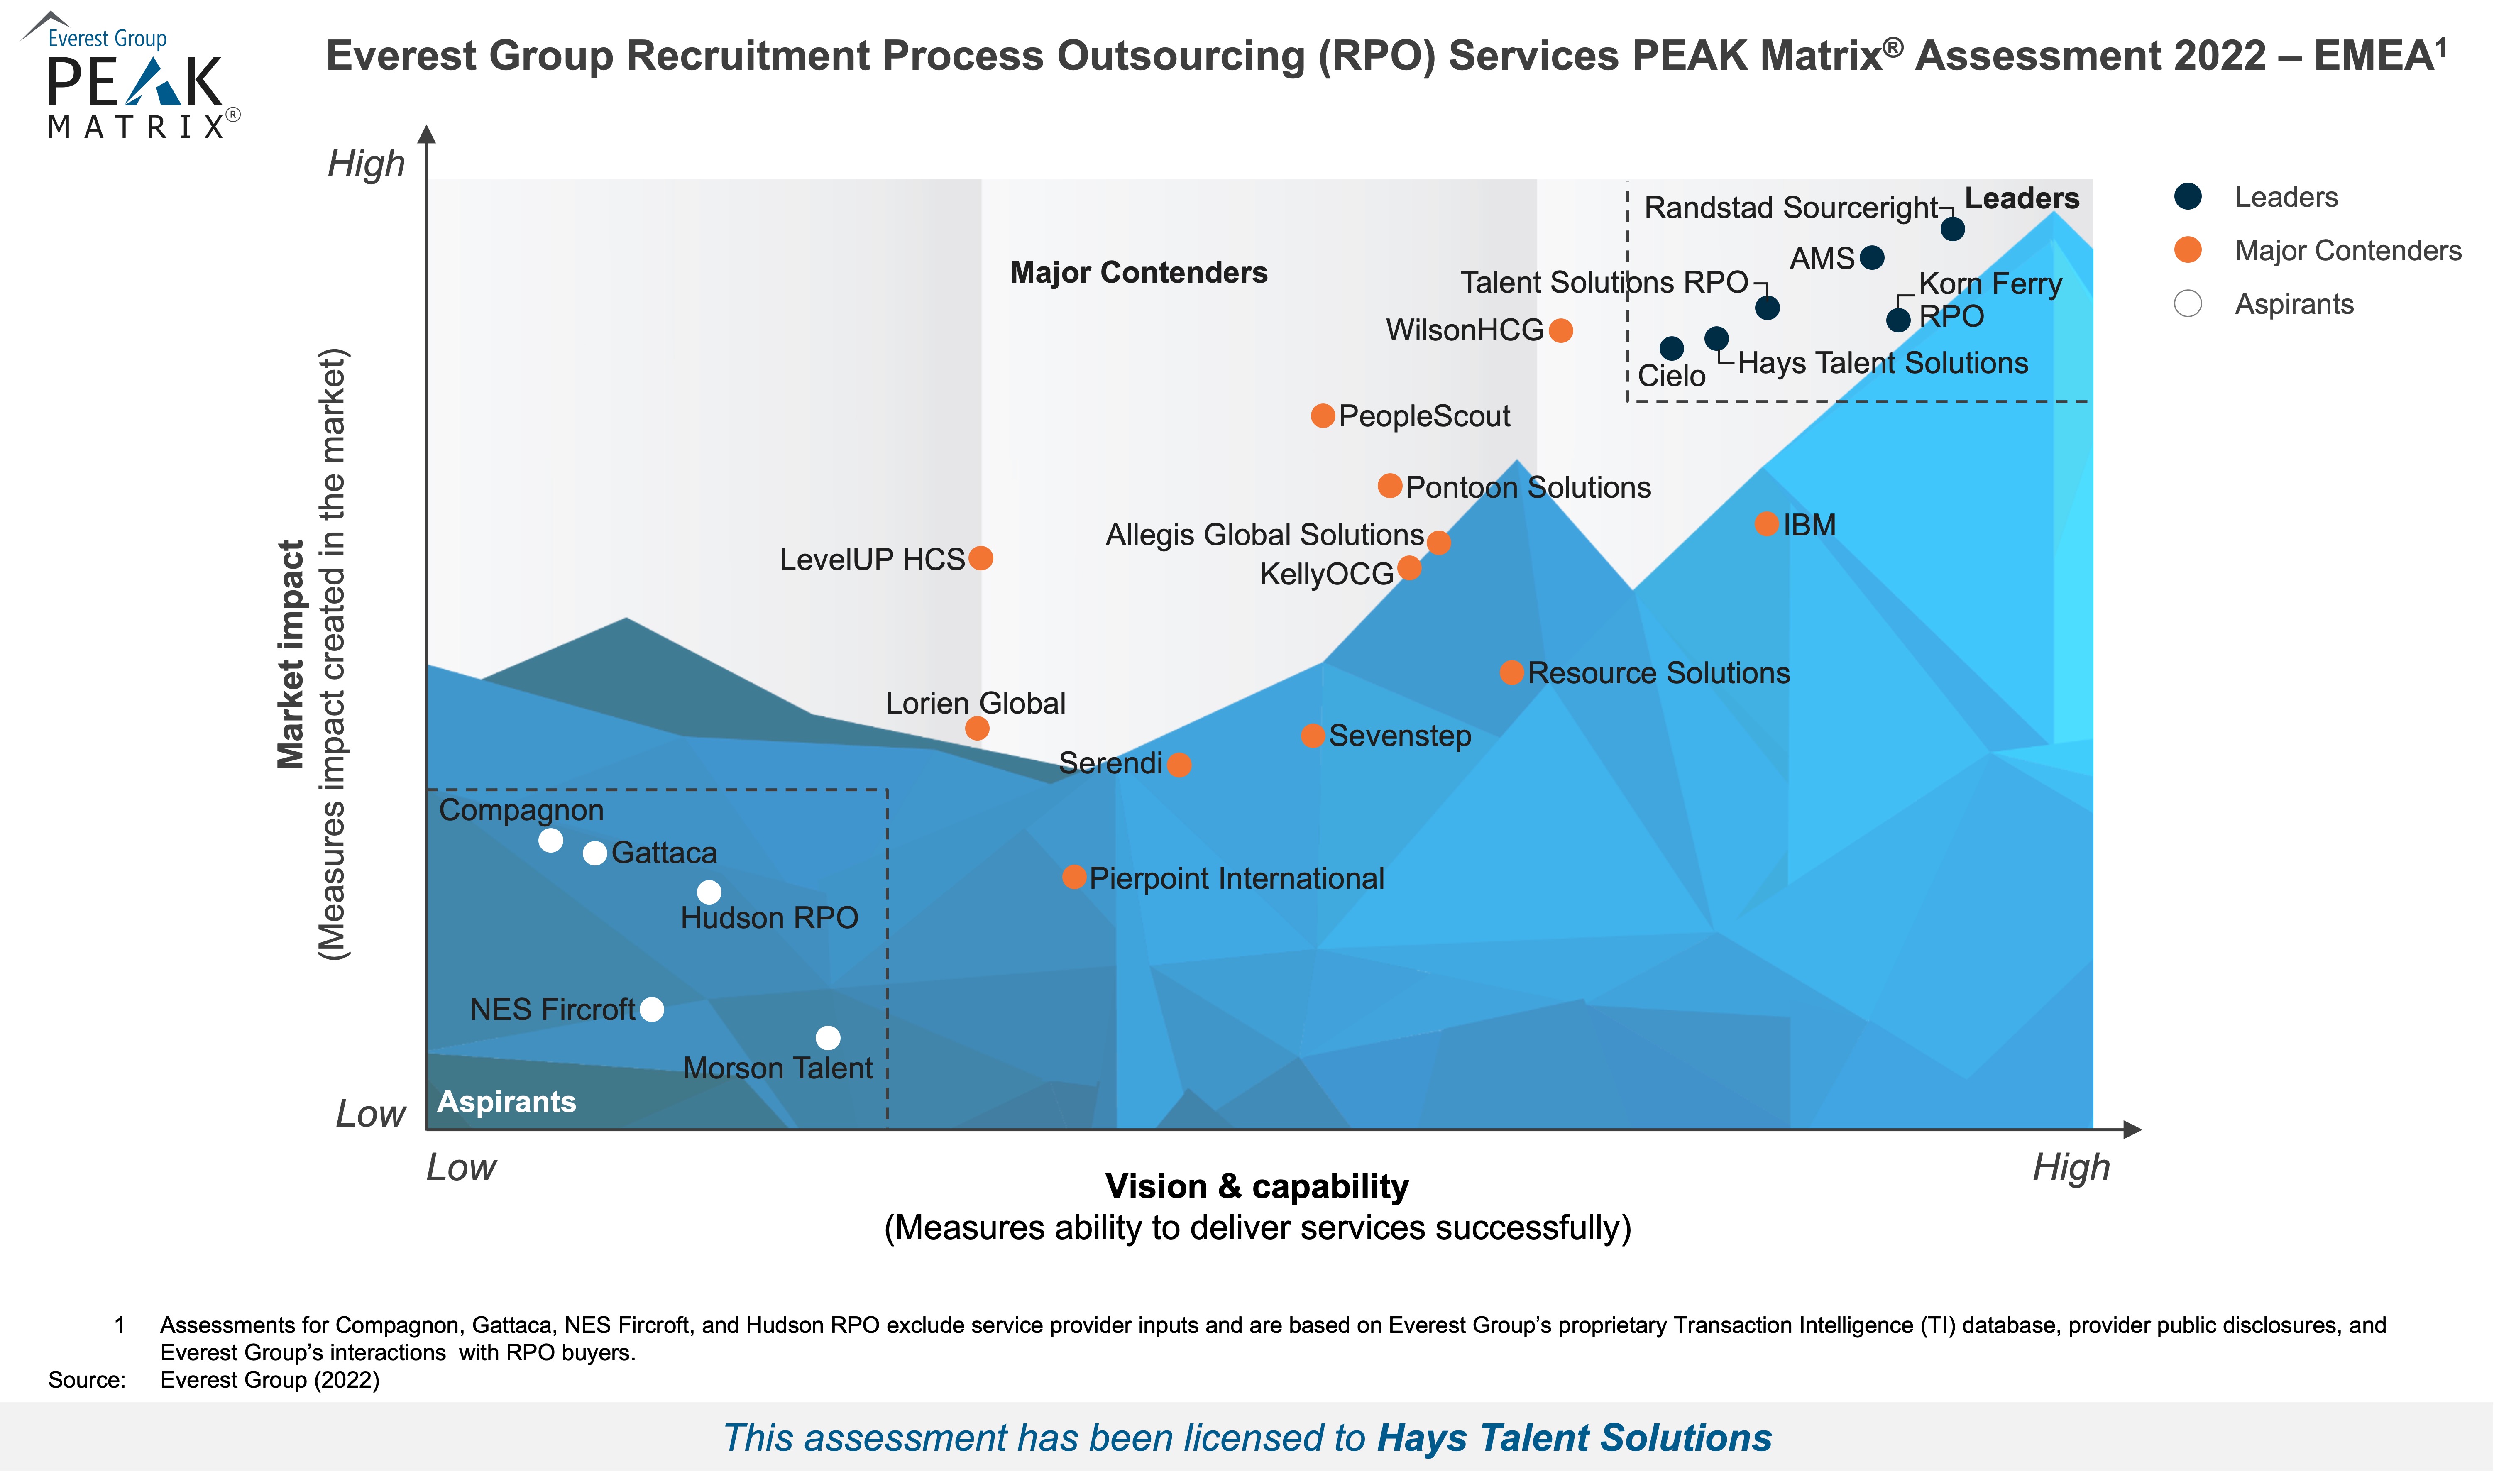 Everest Group Recruitment Process Outsourcing RPO Services PEAK Matrix Assessment 2022 - EMEA